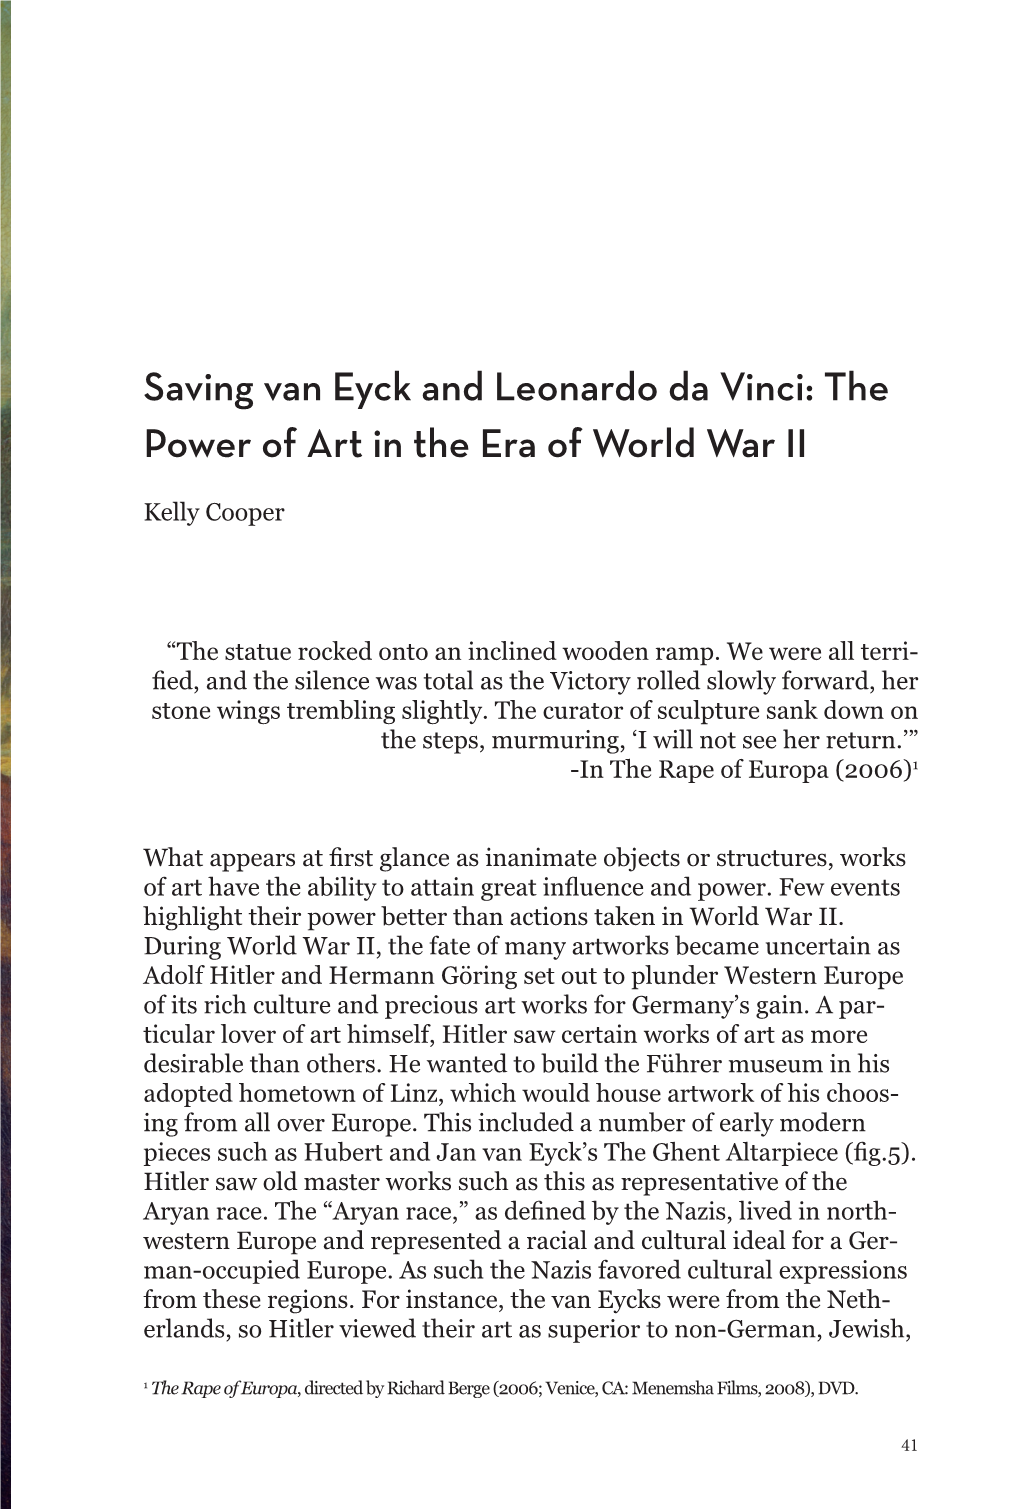 Saving Van Eyck and Leonardo Da Vinci: the Power of Art in the Era of World War II